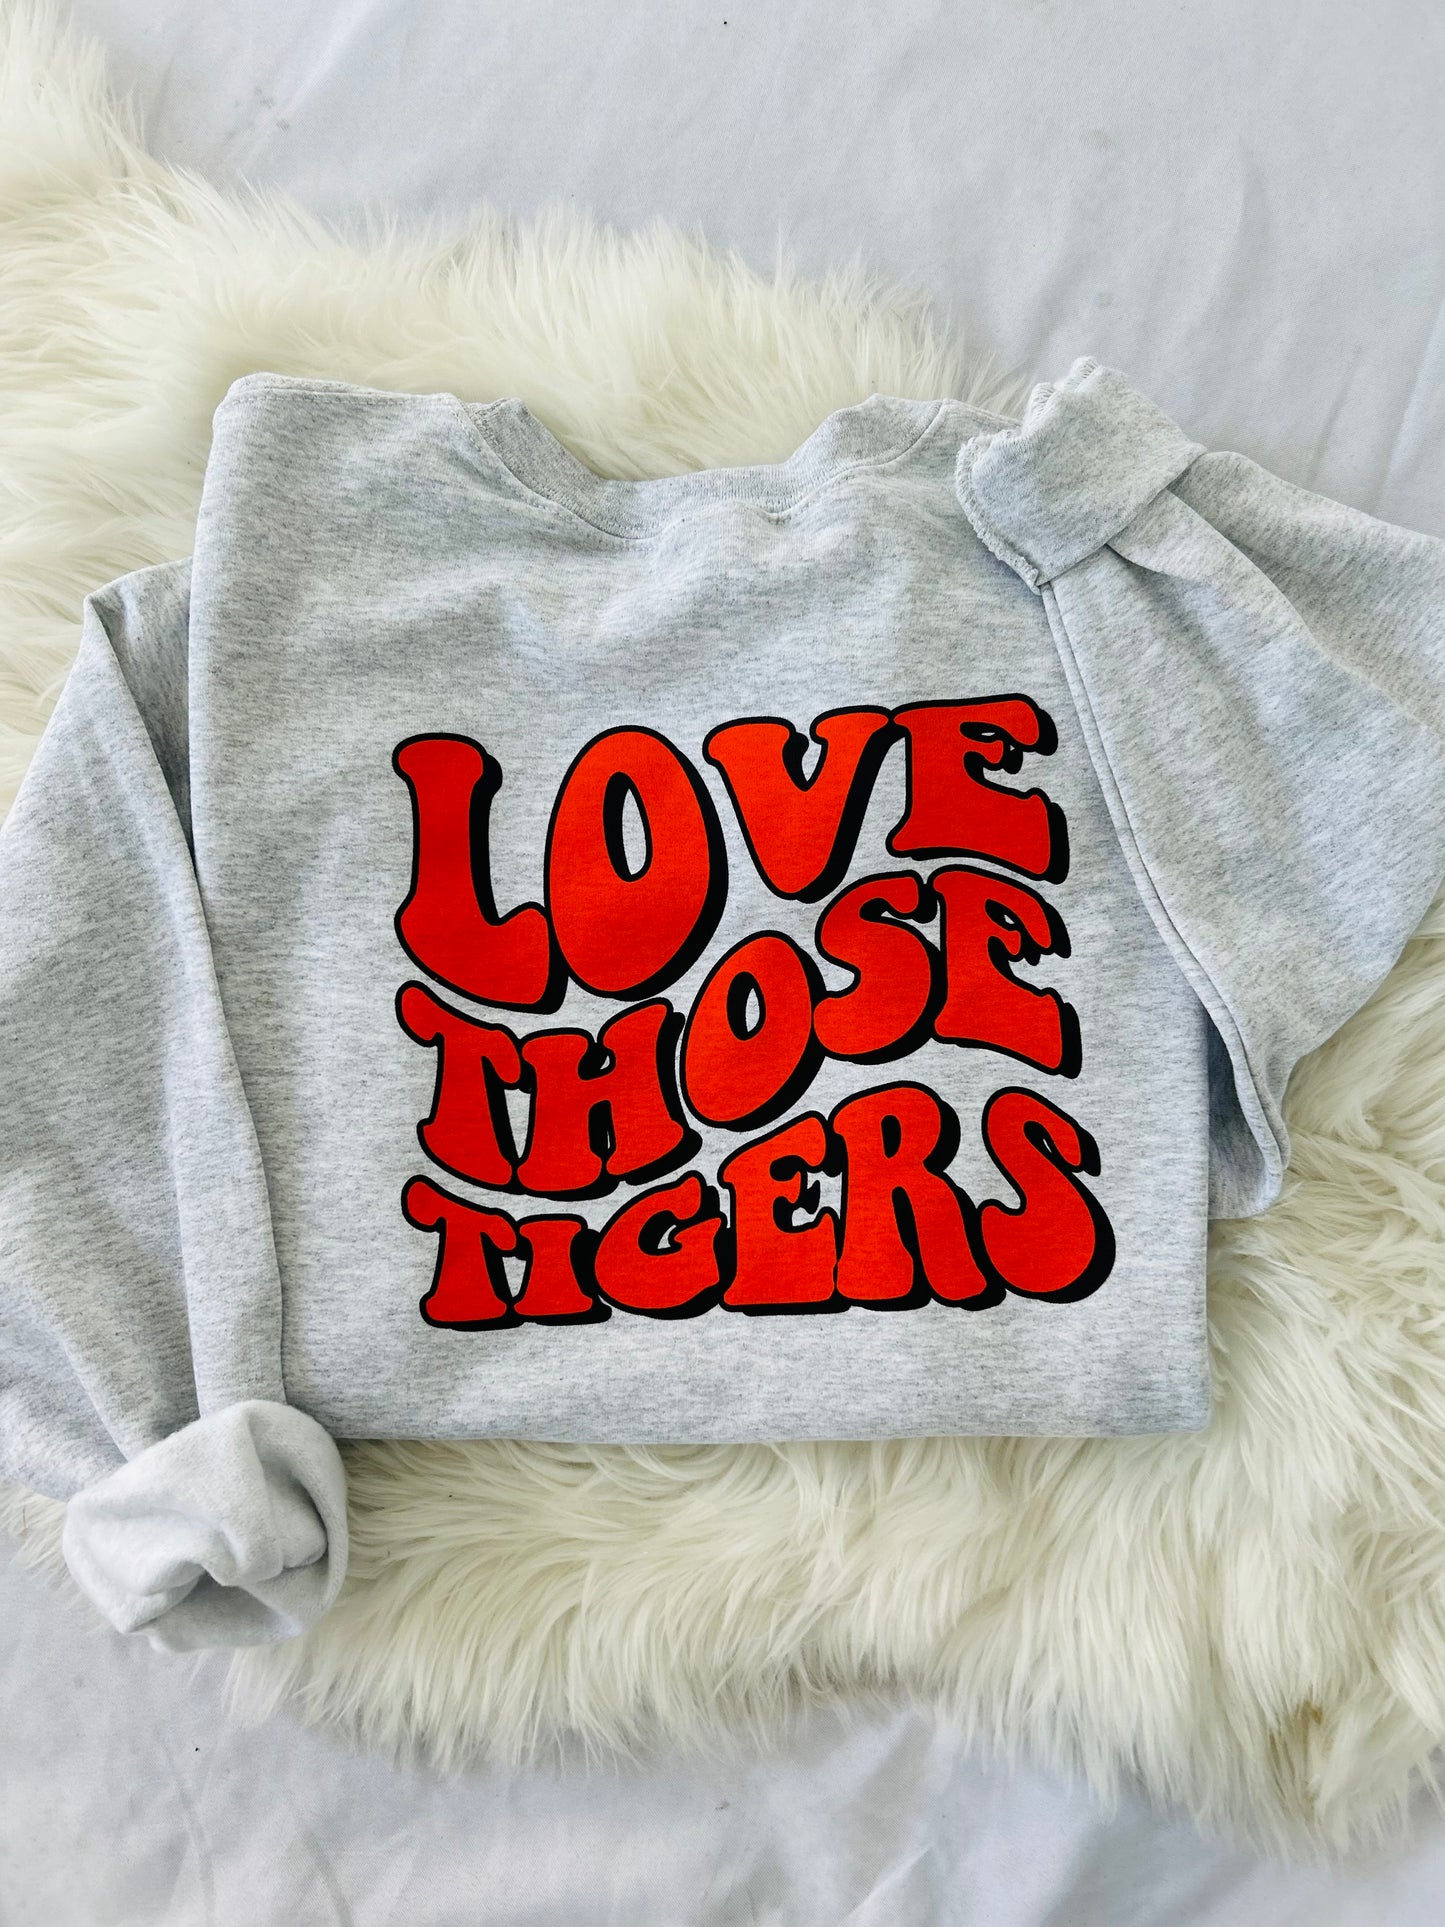 Love Those Tigers Sweatshirt